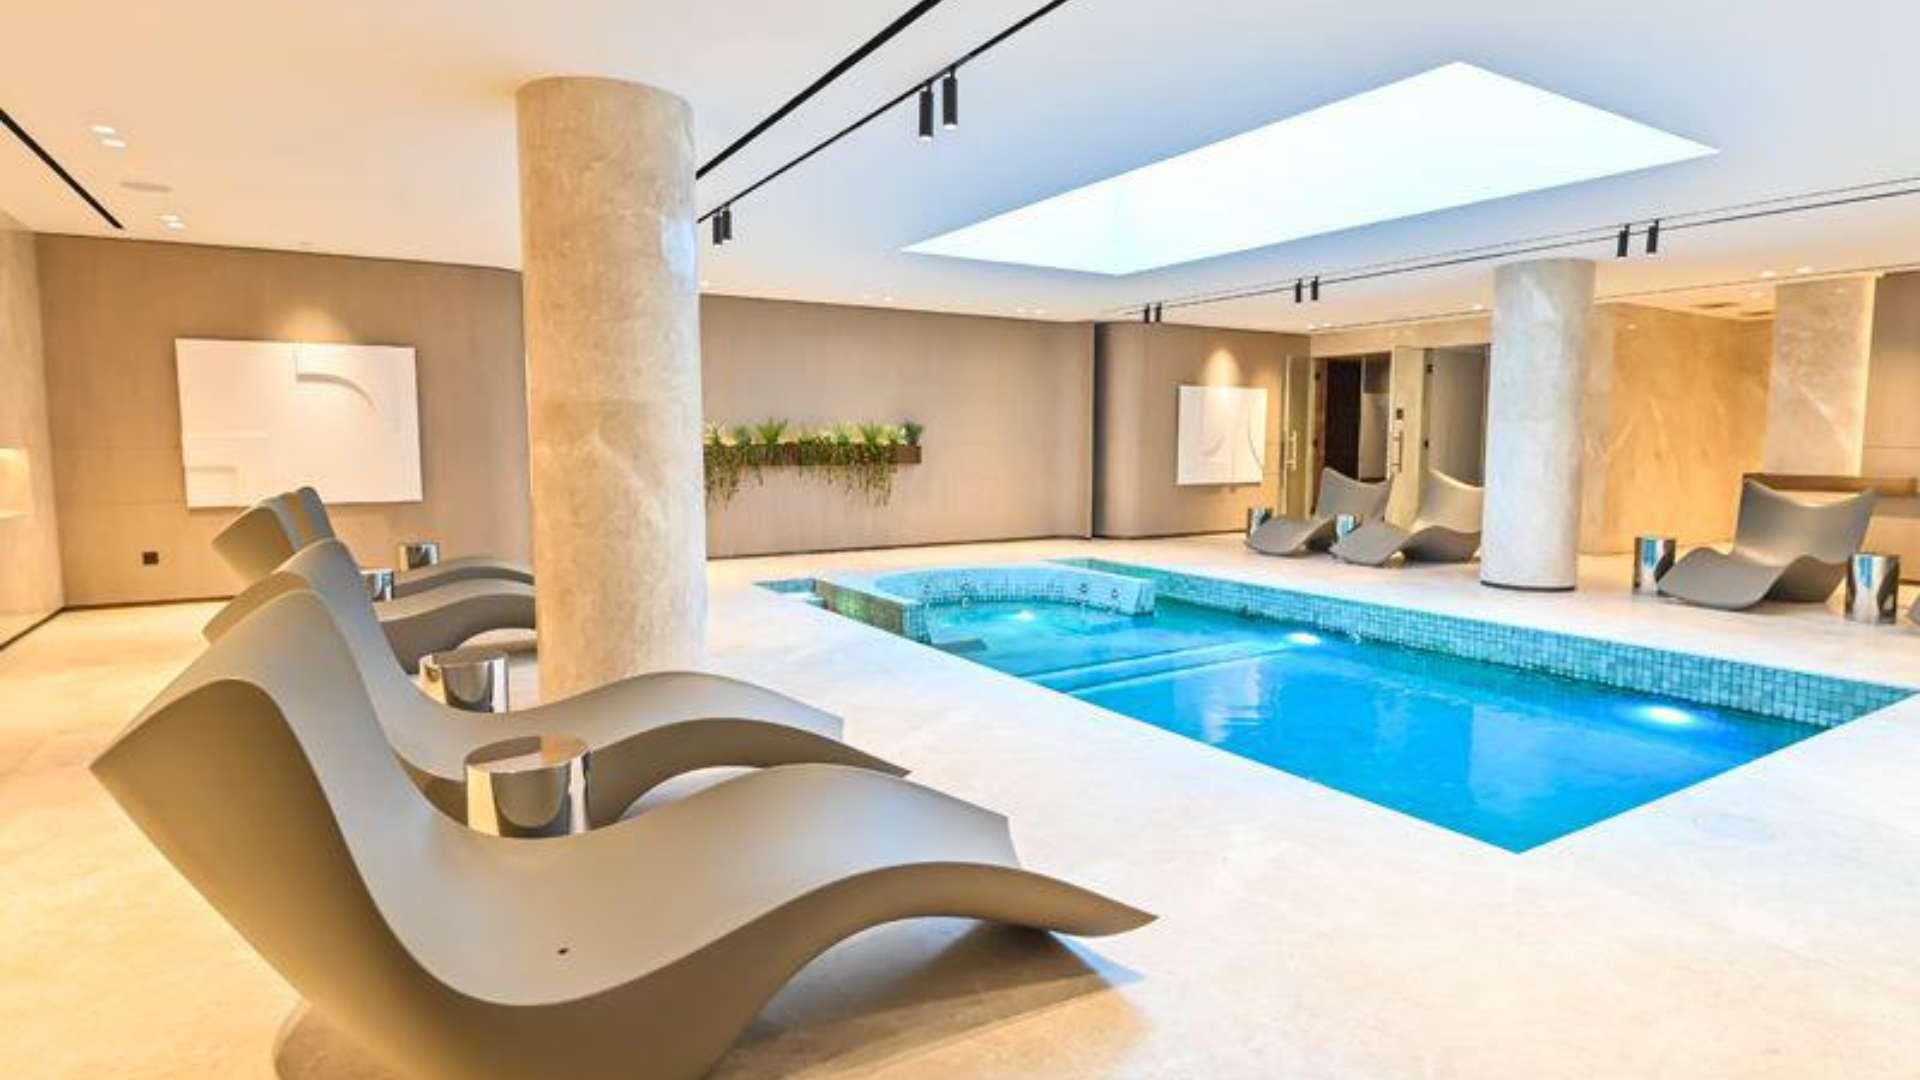 7 Bedroom Villa For Sale Dubai Hills Lp20693 2d8bacc844281a00.jpg